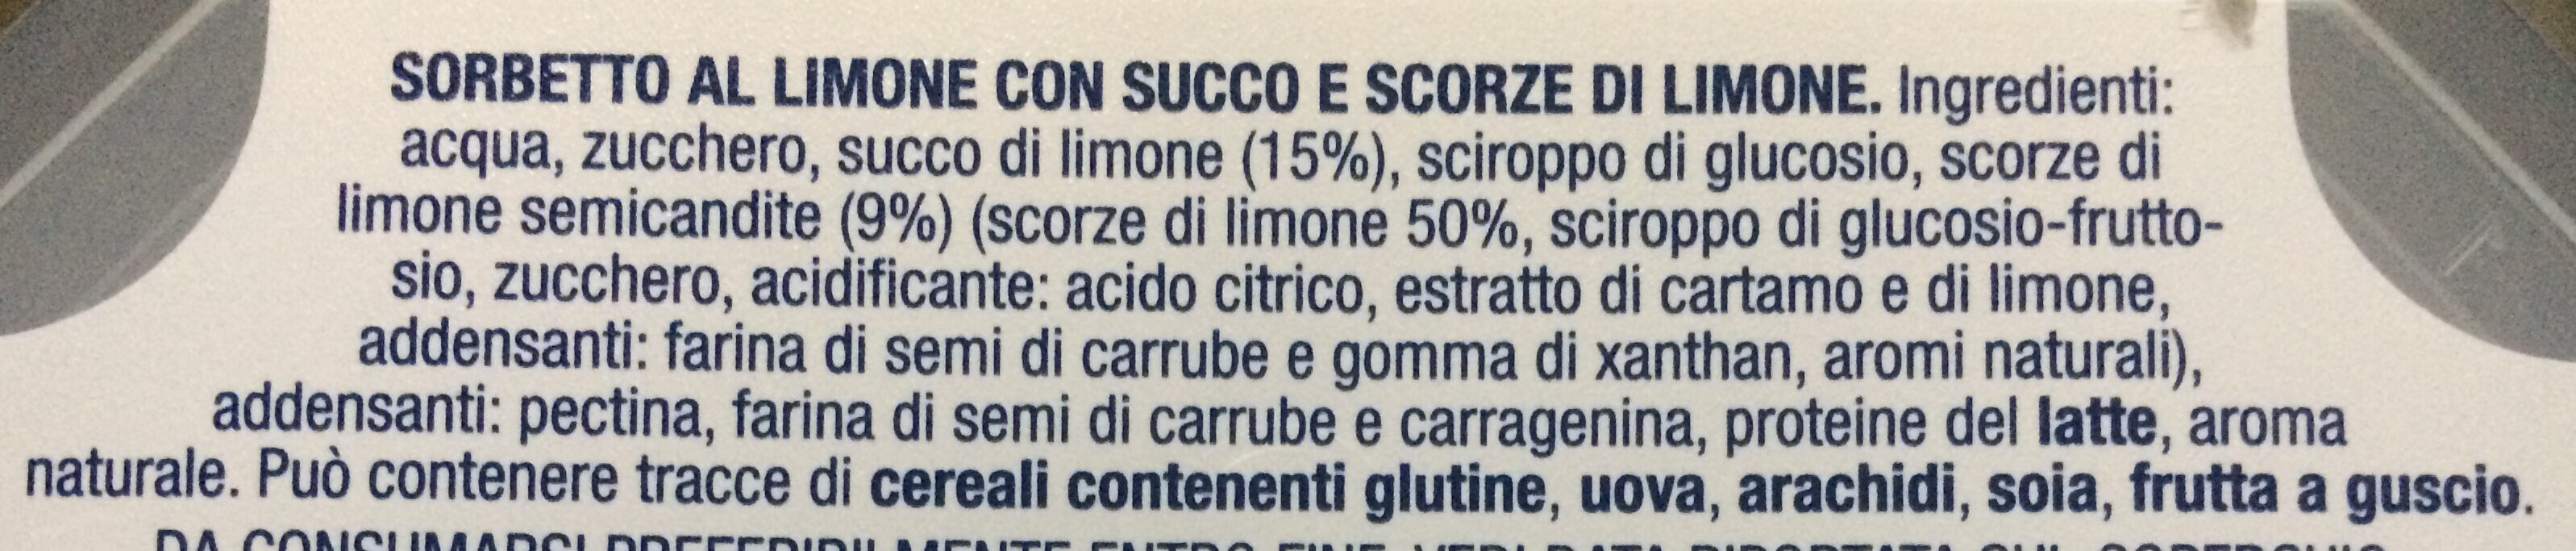 Sorbetto al limone - Ingredienti - it